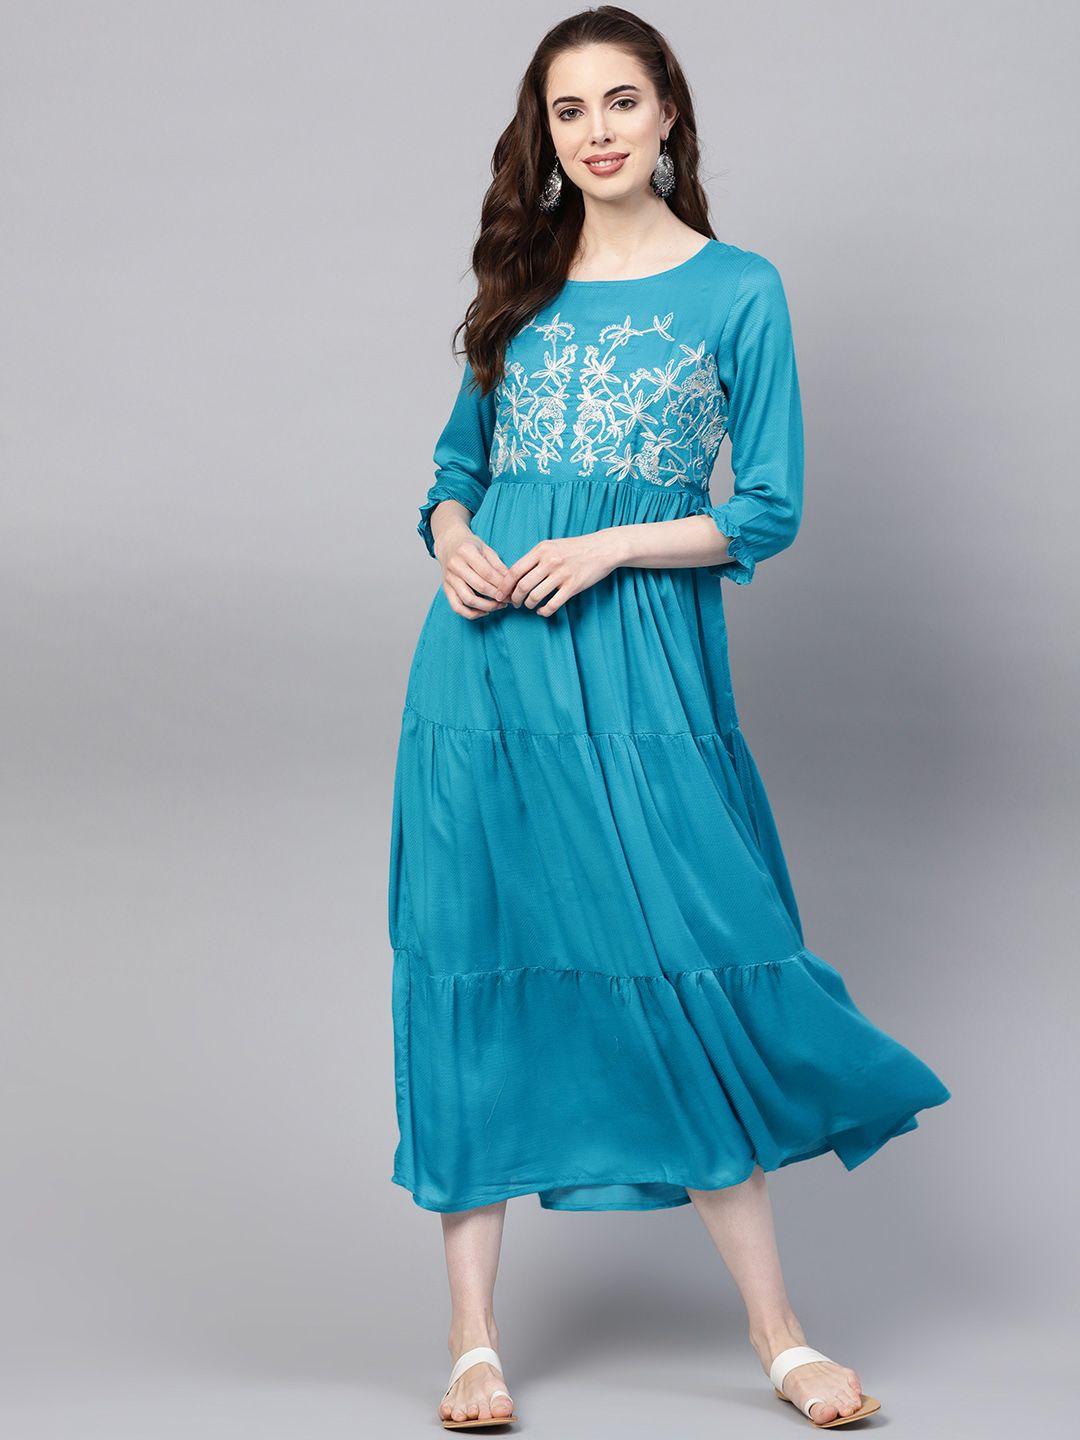 jaipur-kurti-turquoise-blue-self-design-tiered-empire-dress